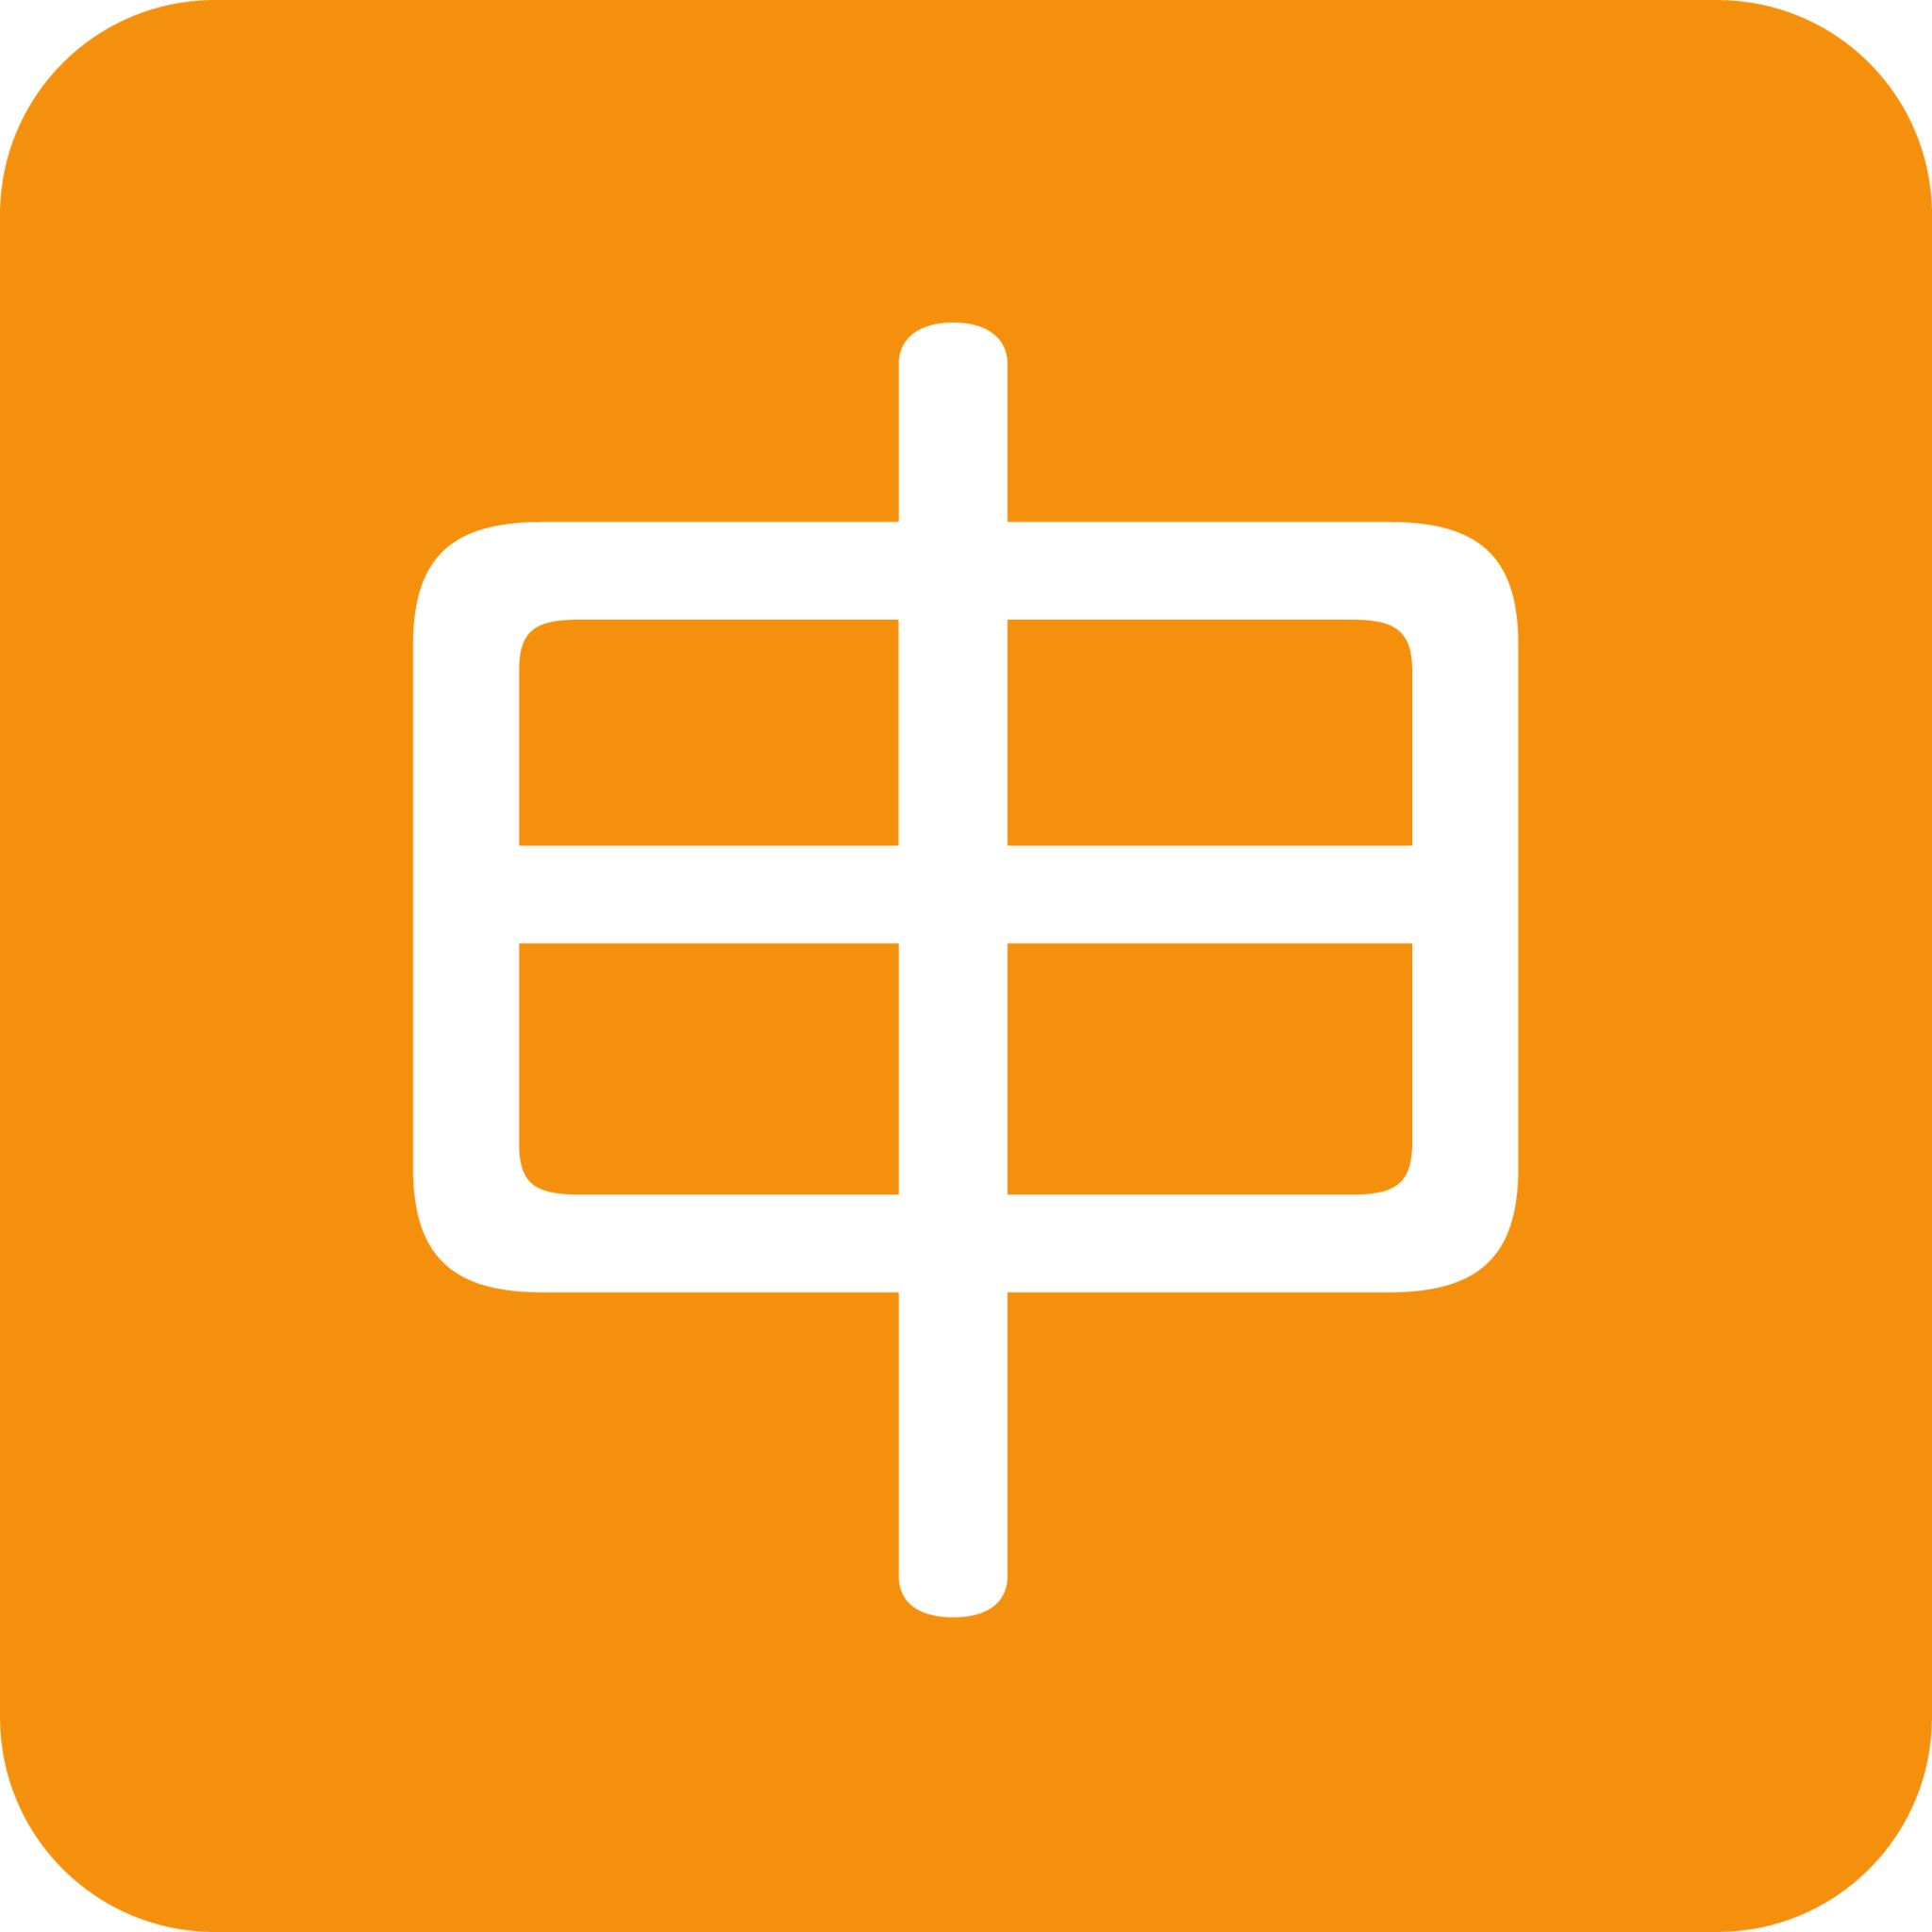 squared cjk unified ideograph-7533 emoji